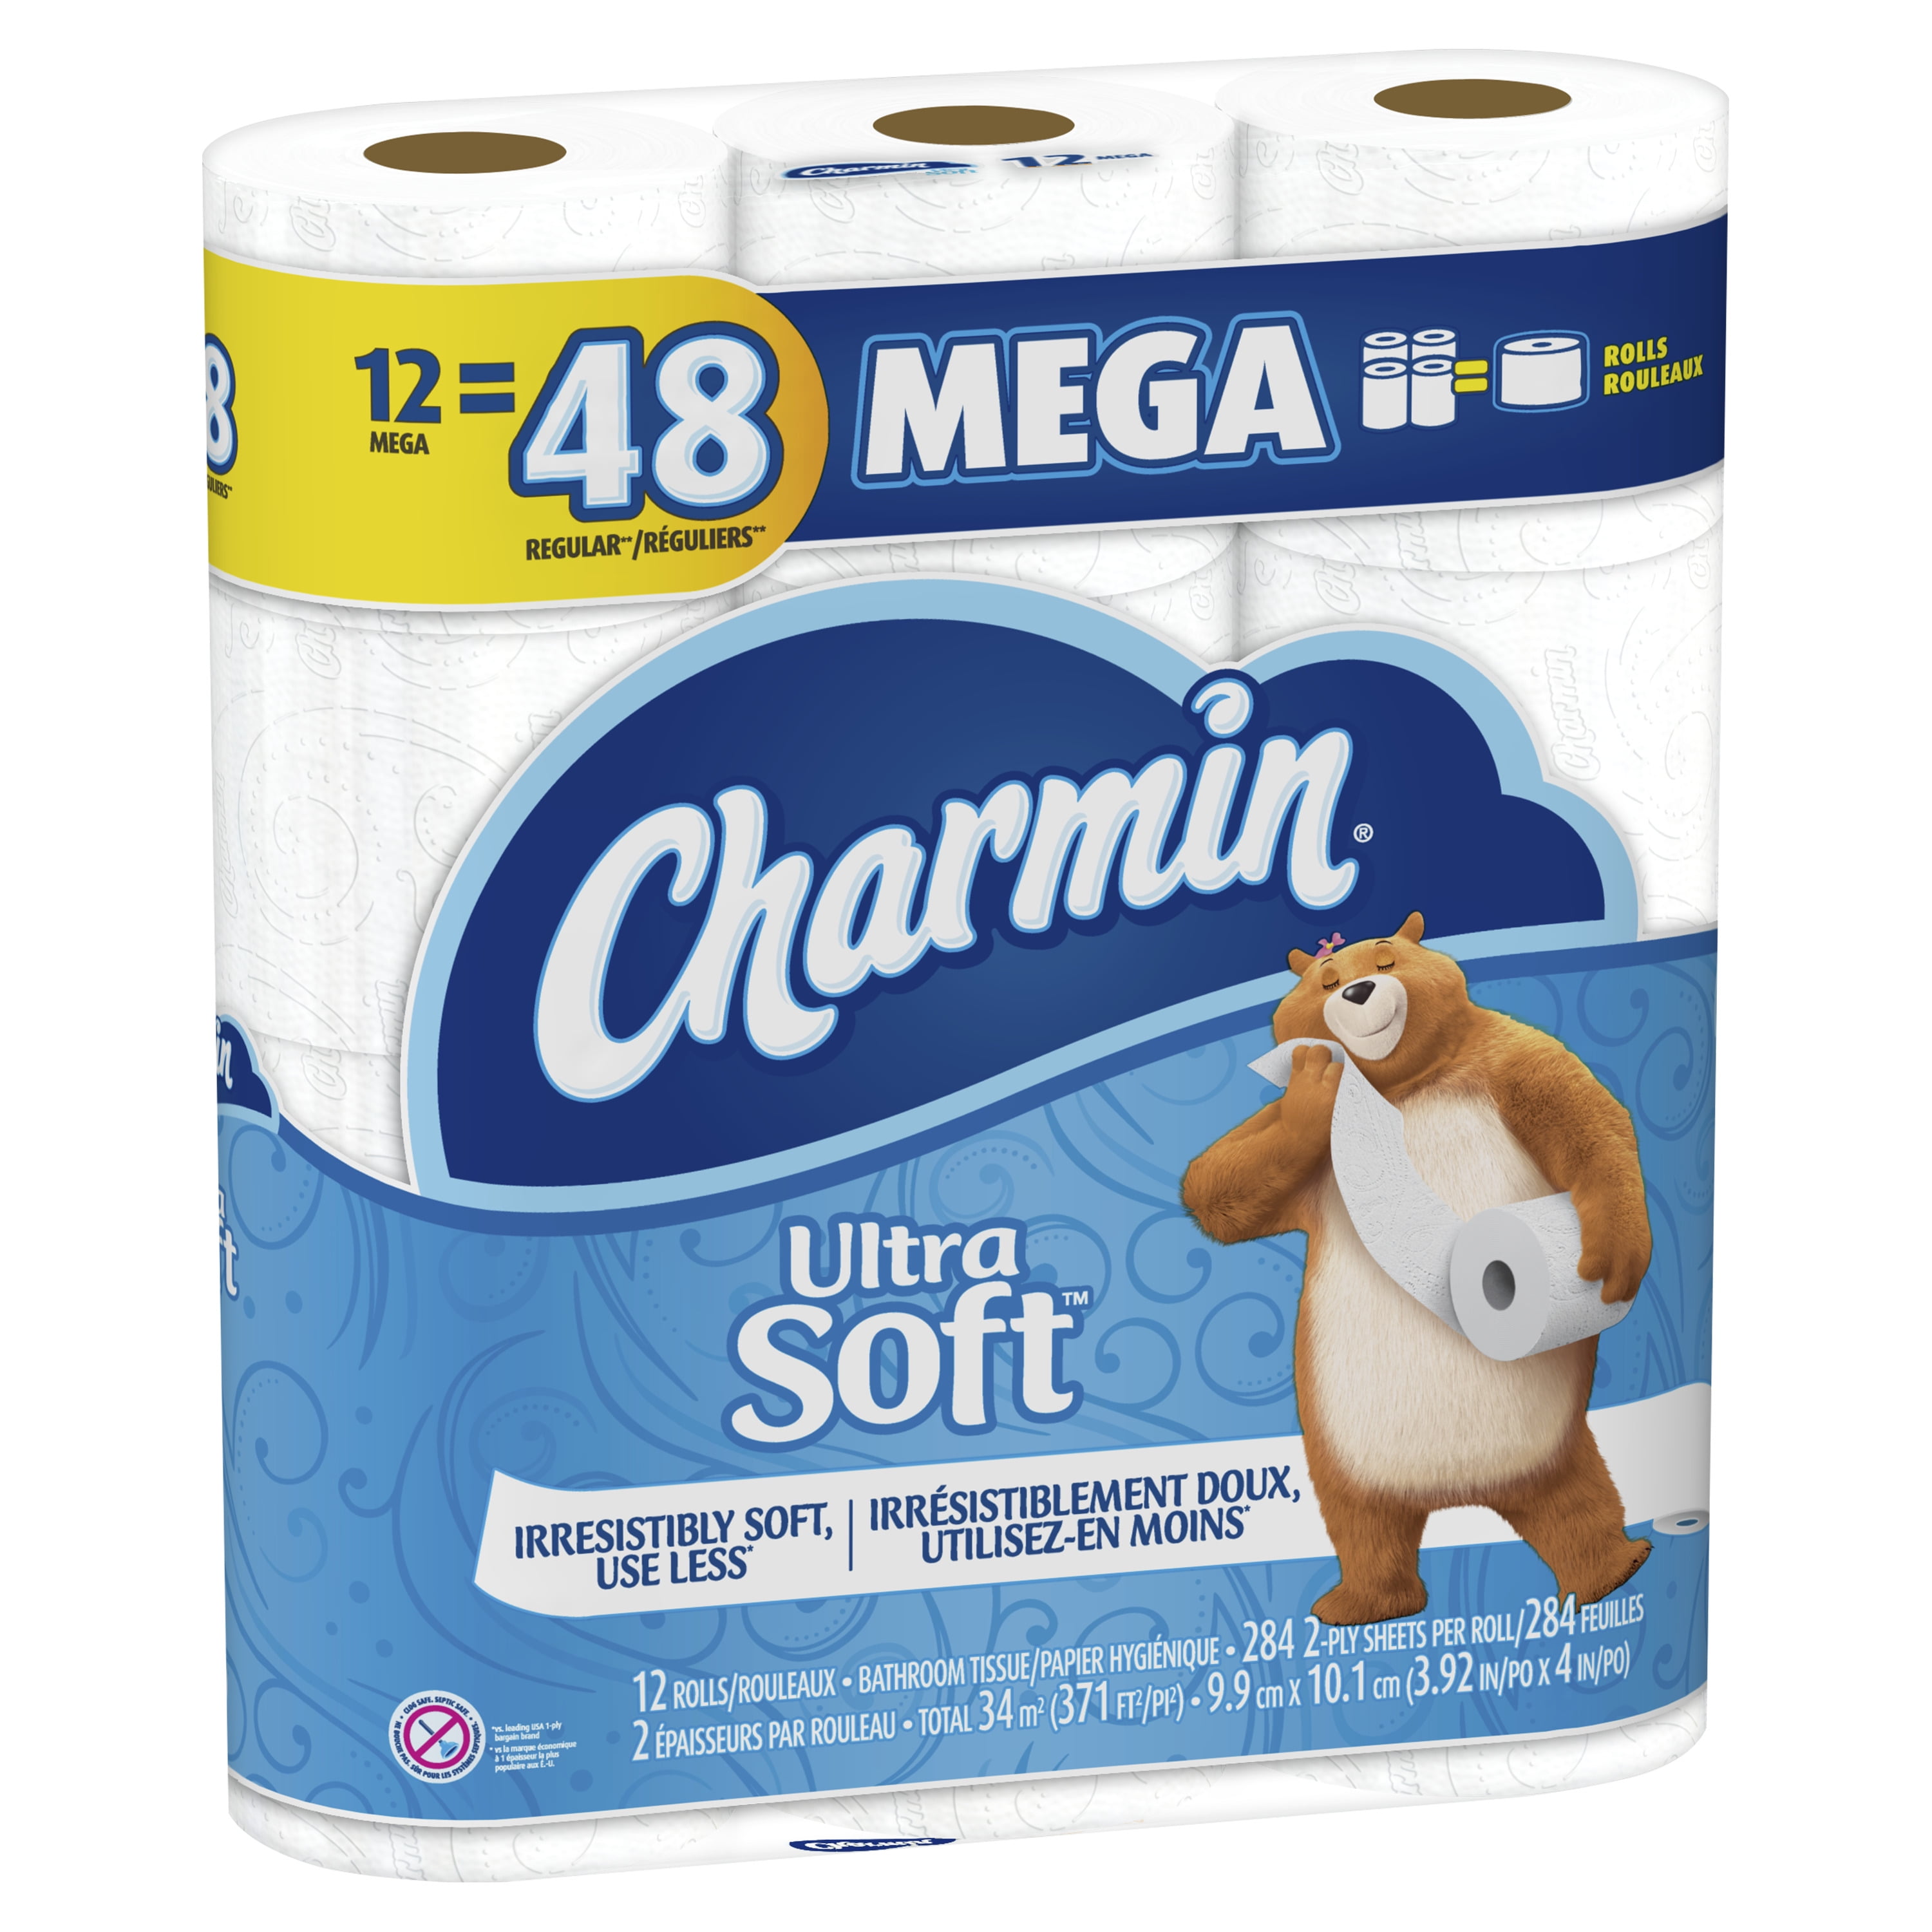 Charmin Ultra Soft Toilet Paper 12 Mega Rolls 48 Regular